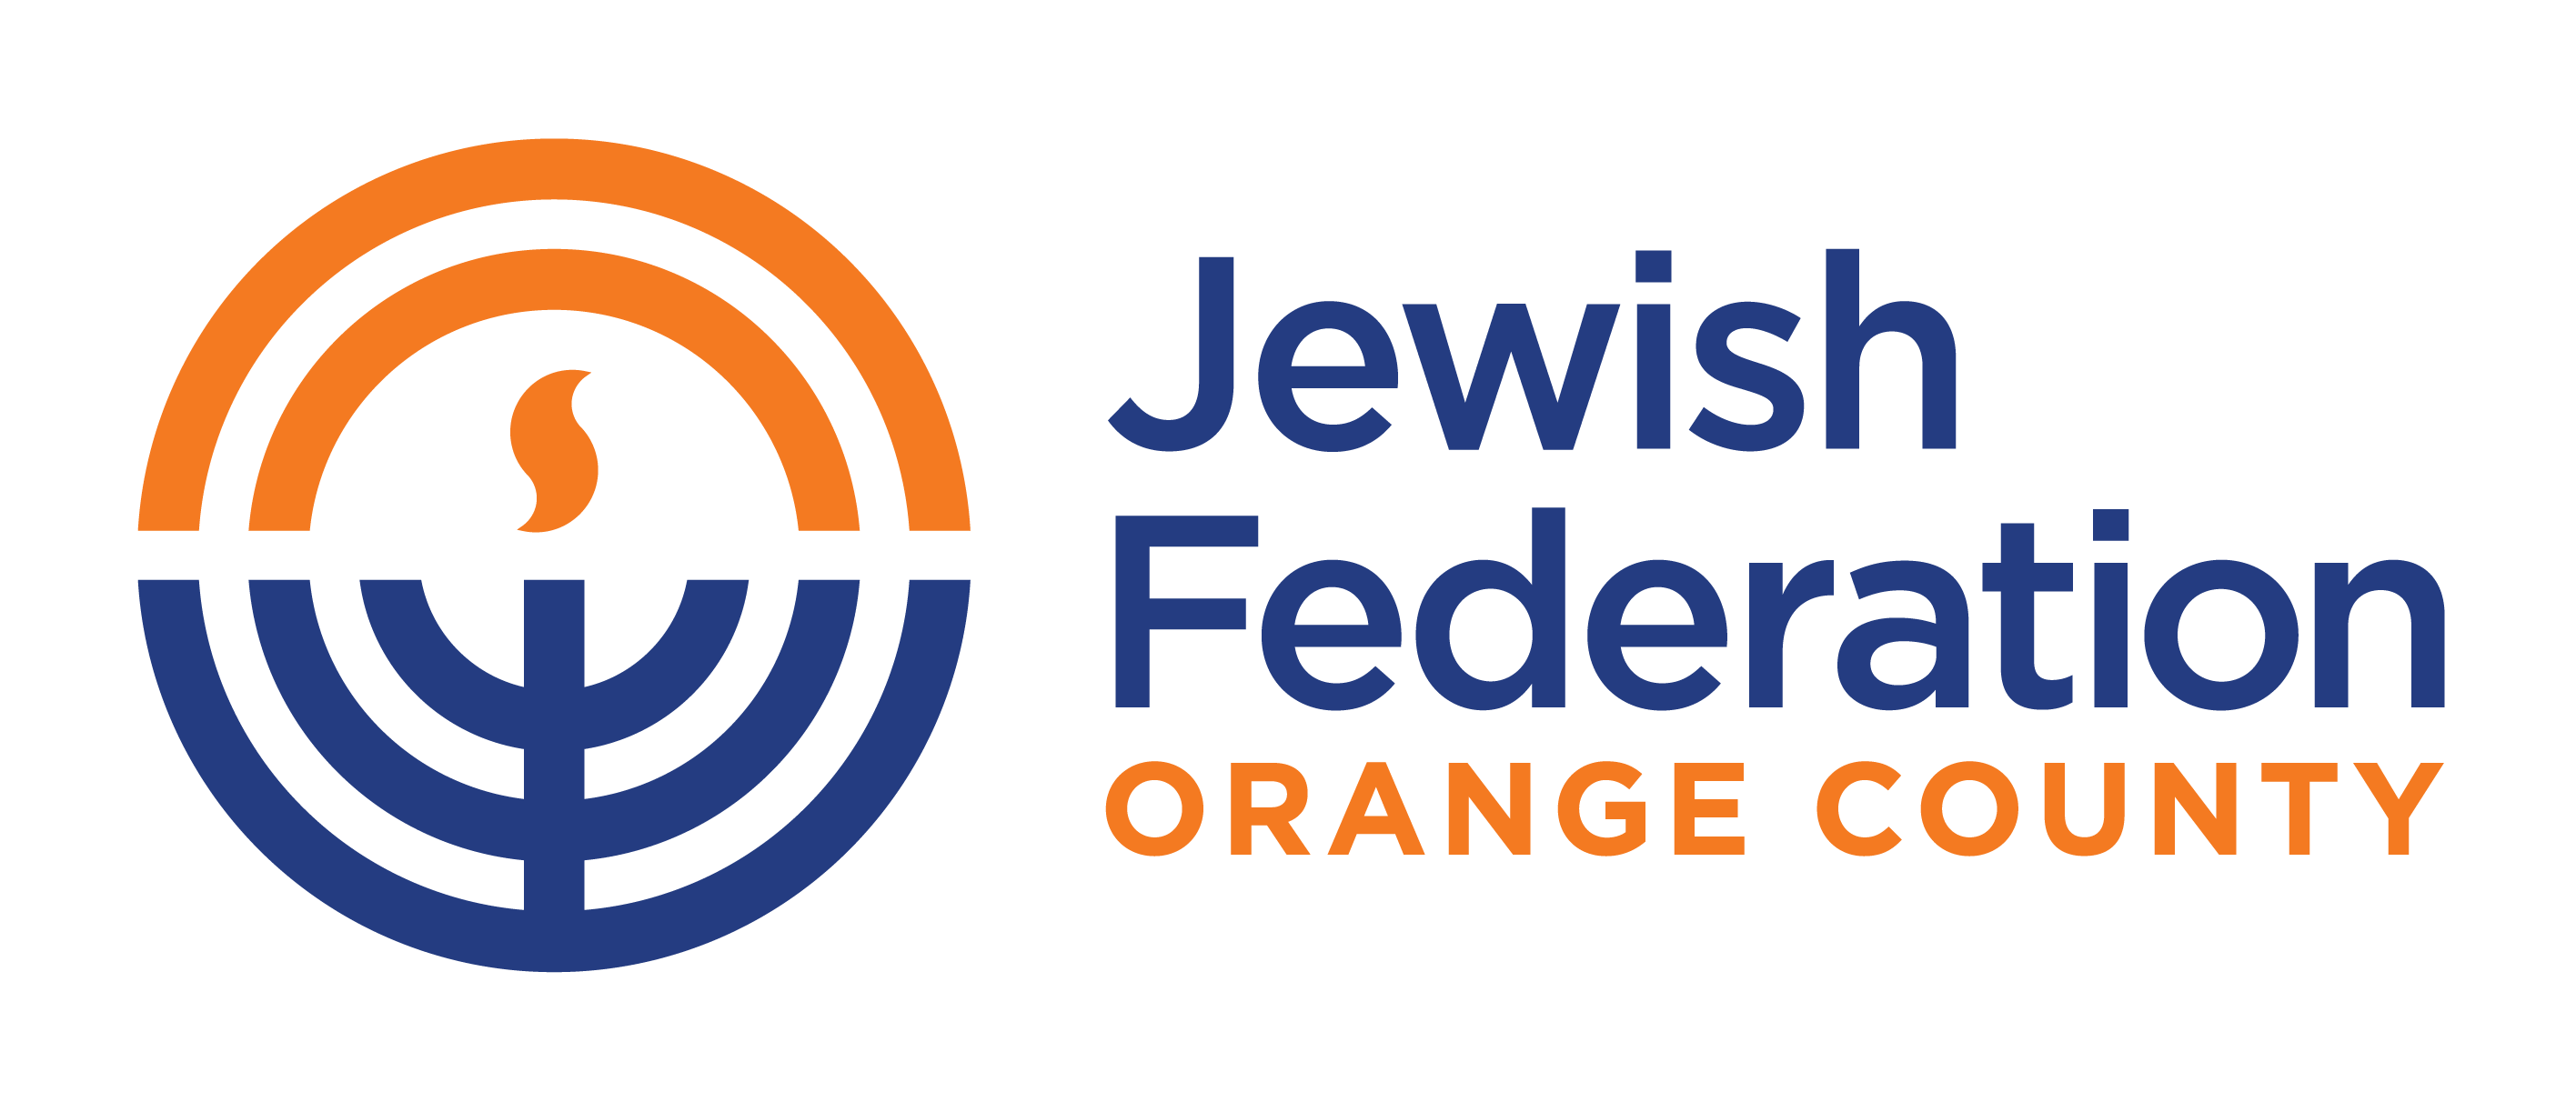 Jewish Federation Orange County